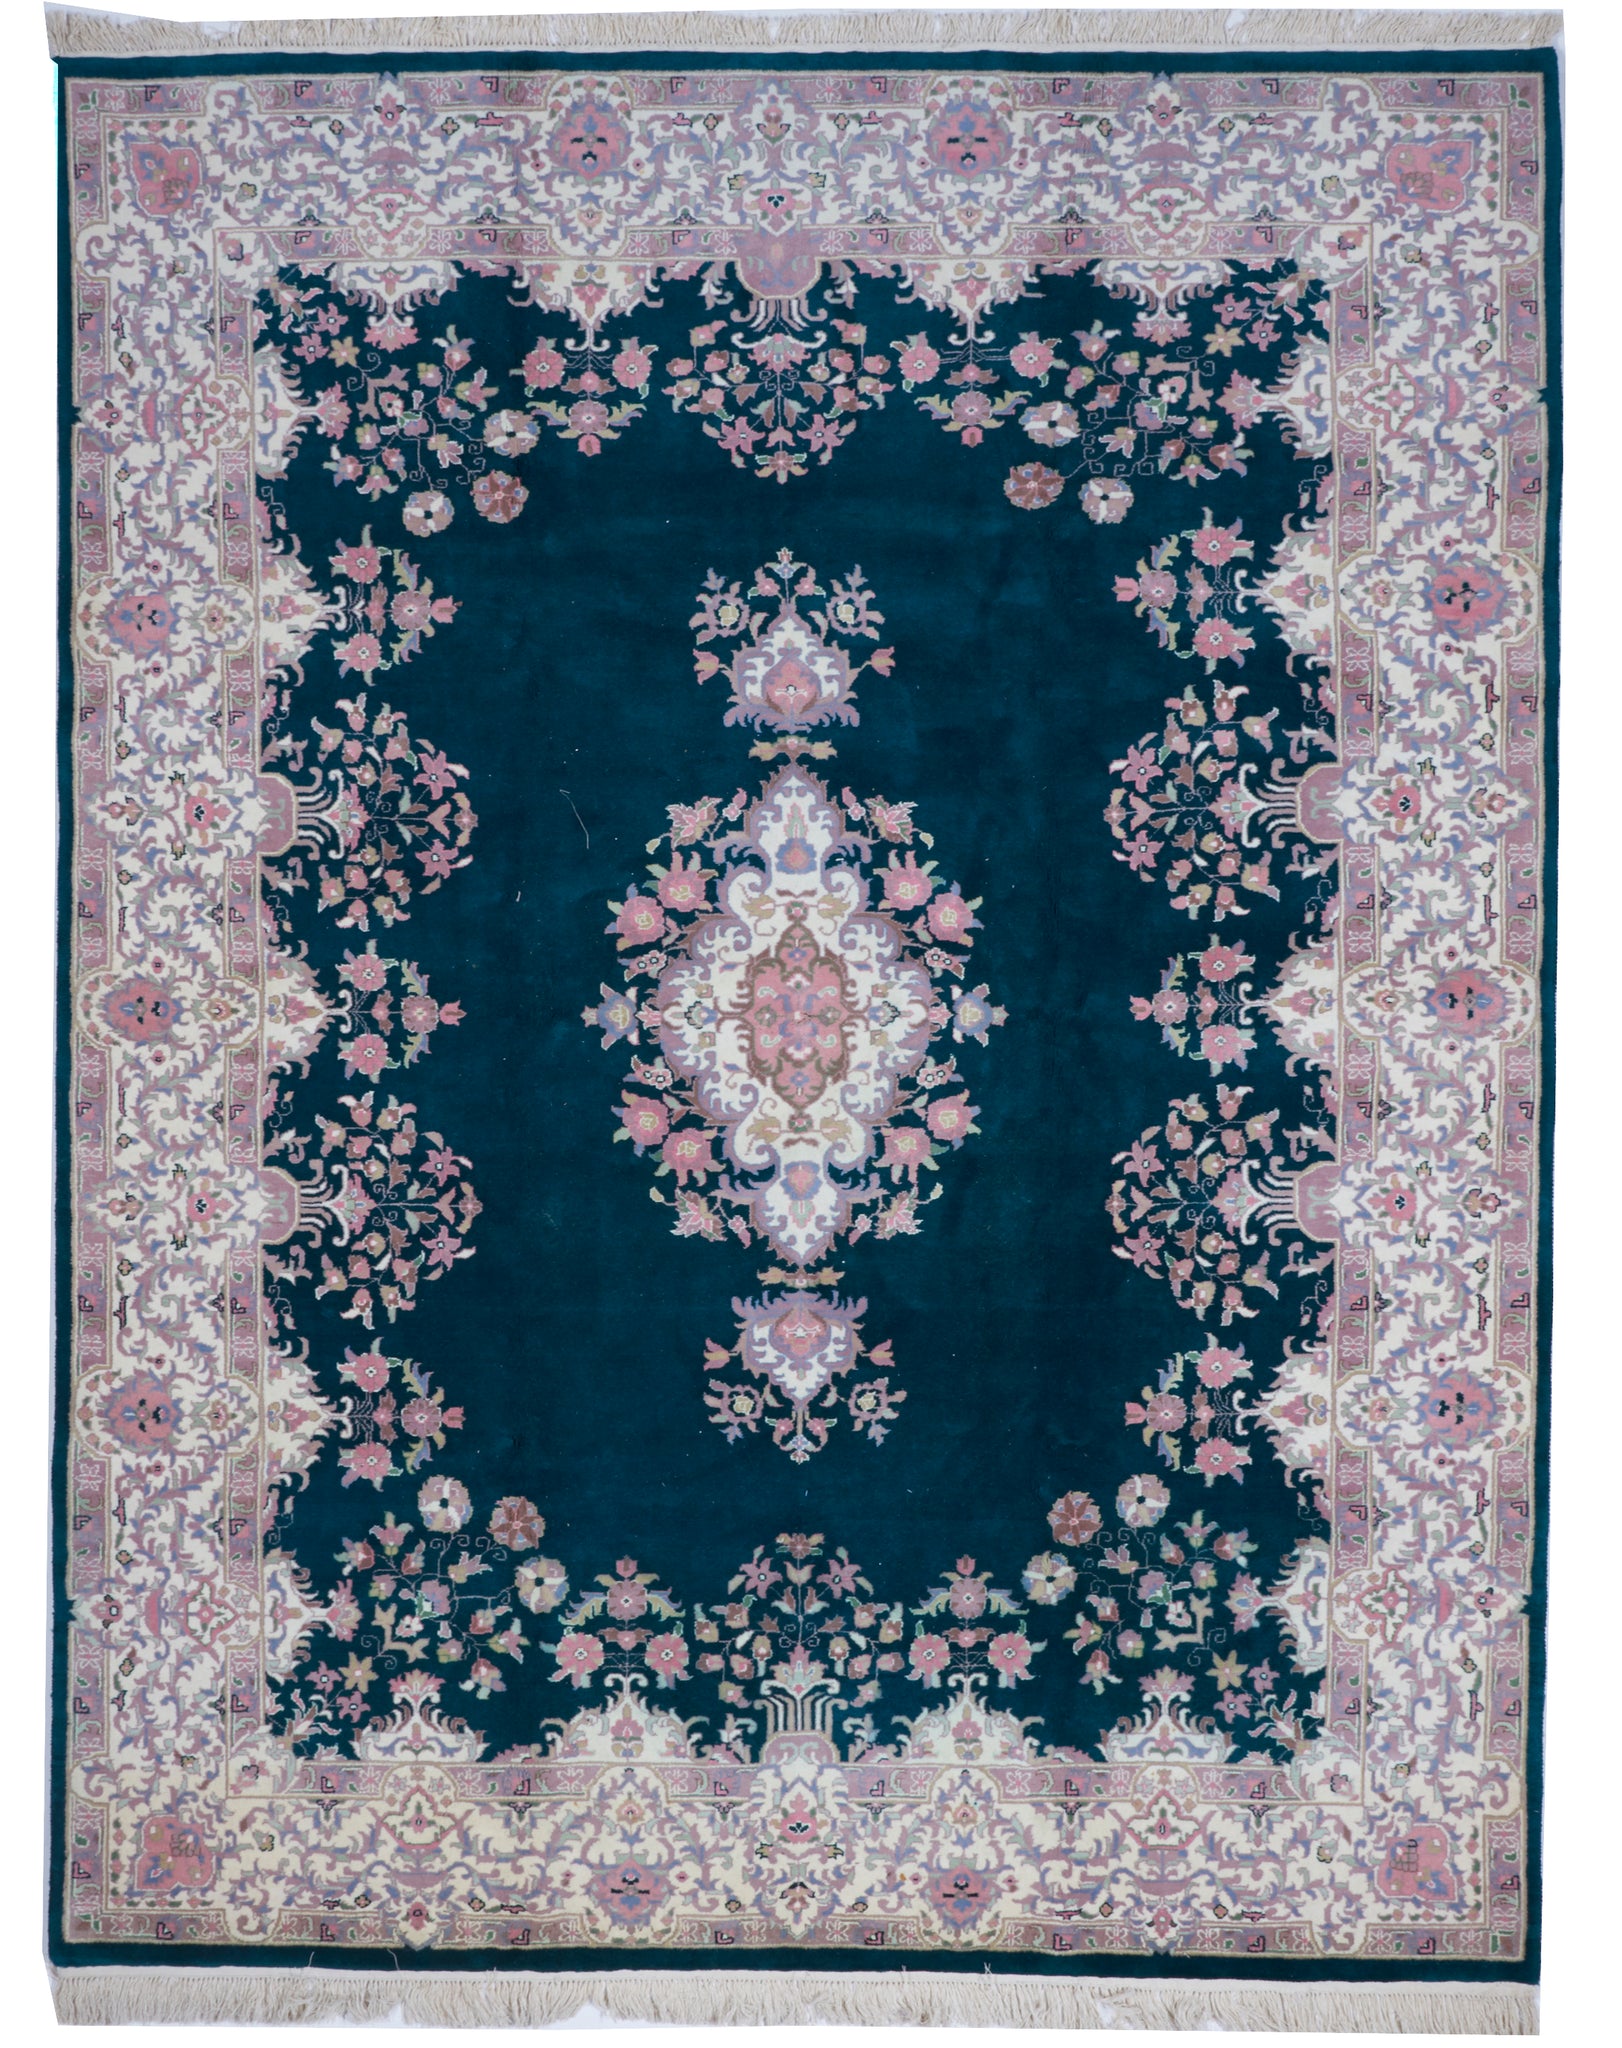 Kerman Floral Hand Knotted Black Ivory Pink Wool Rug 7'10 x 10'1 - IGotYourRug